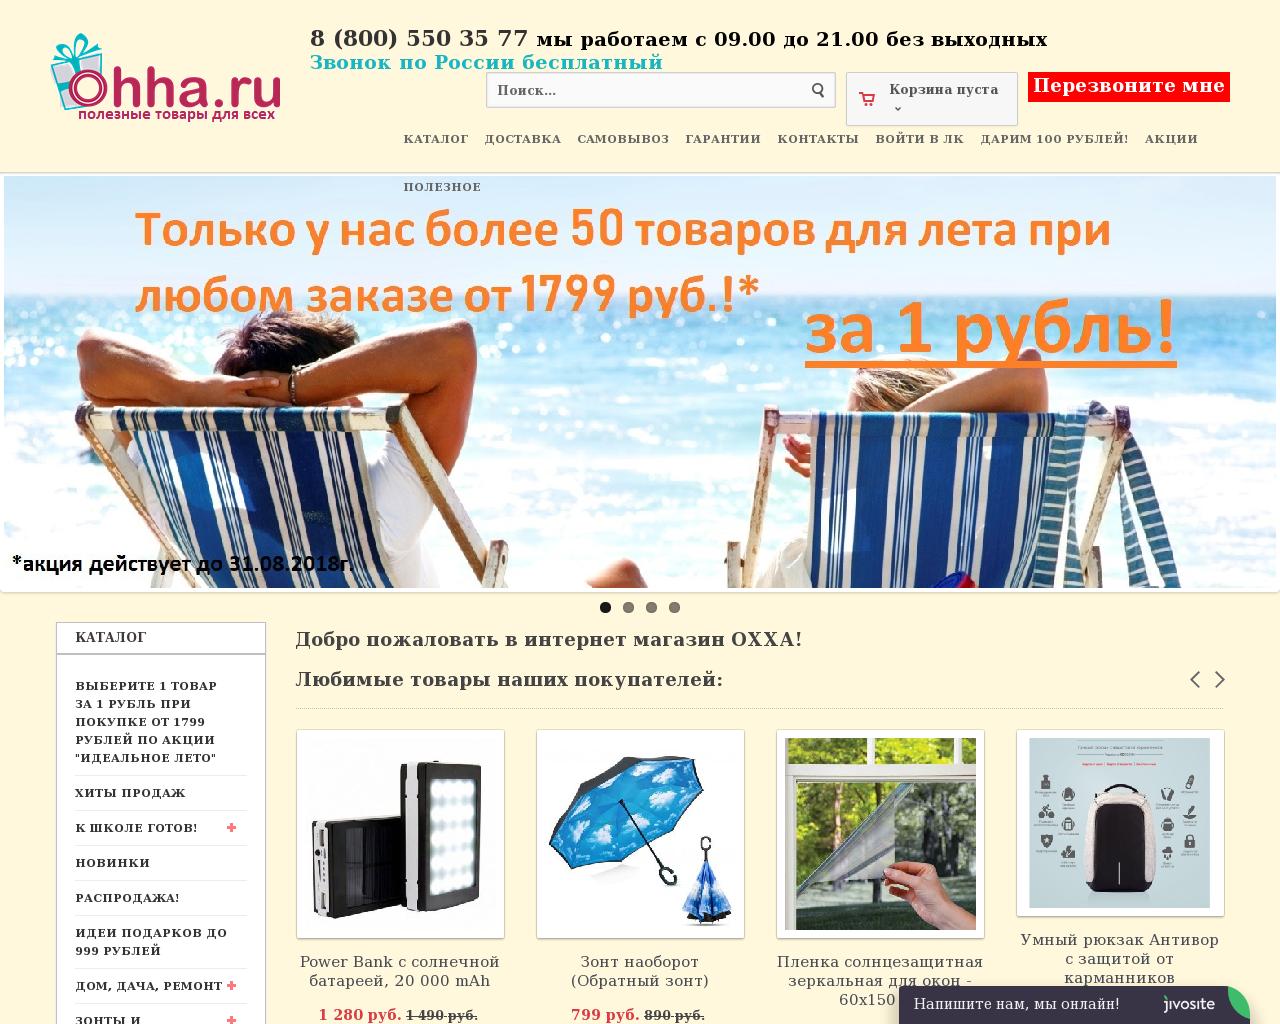 Изображение сайта ohha.ru в разрешении 1280x1024